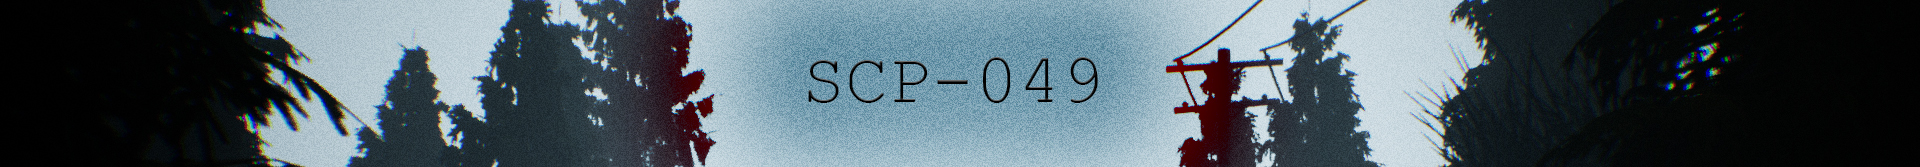 SCP - 049 (Playable Teaser)